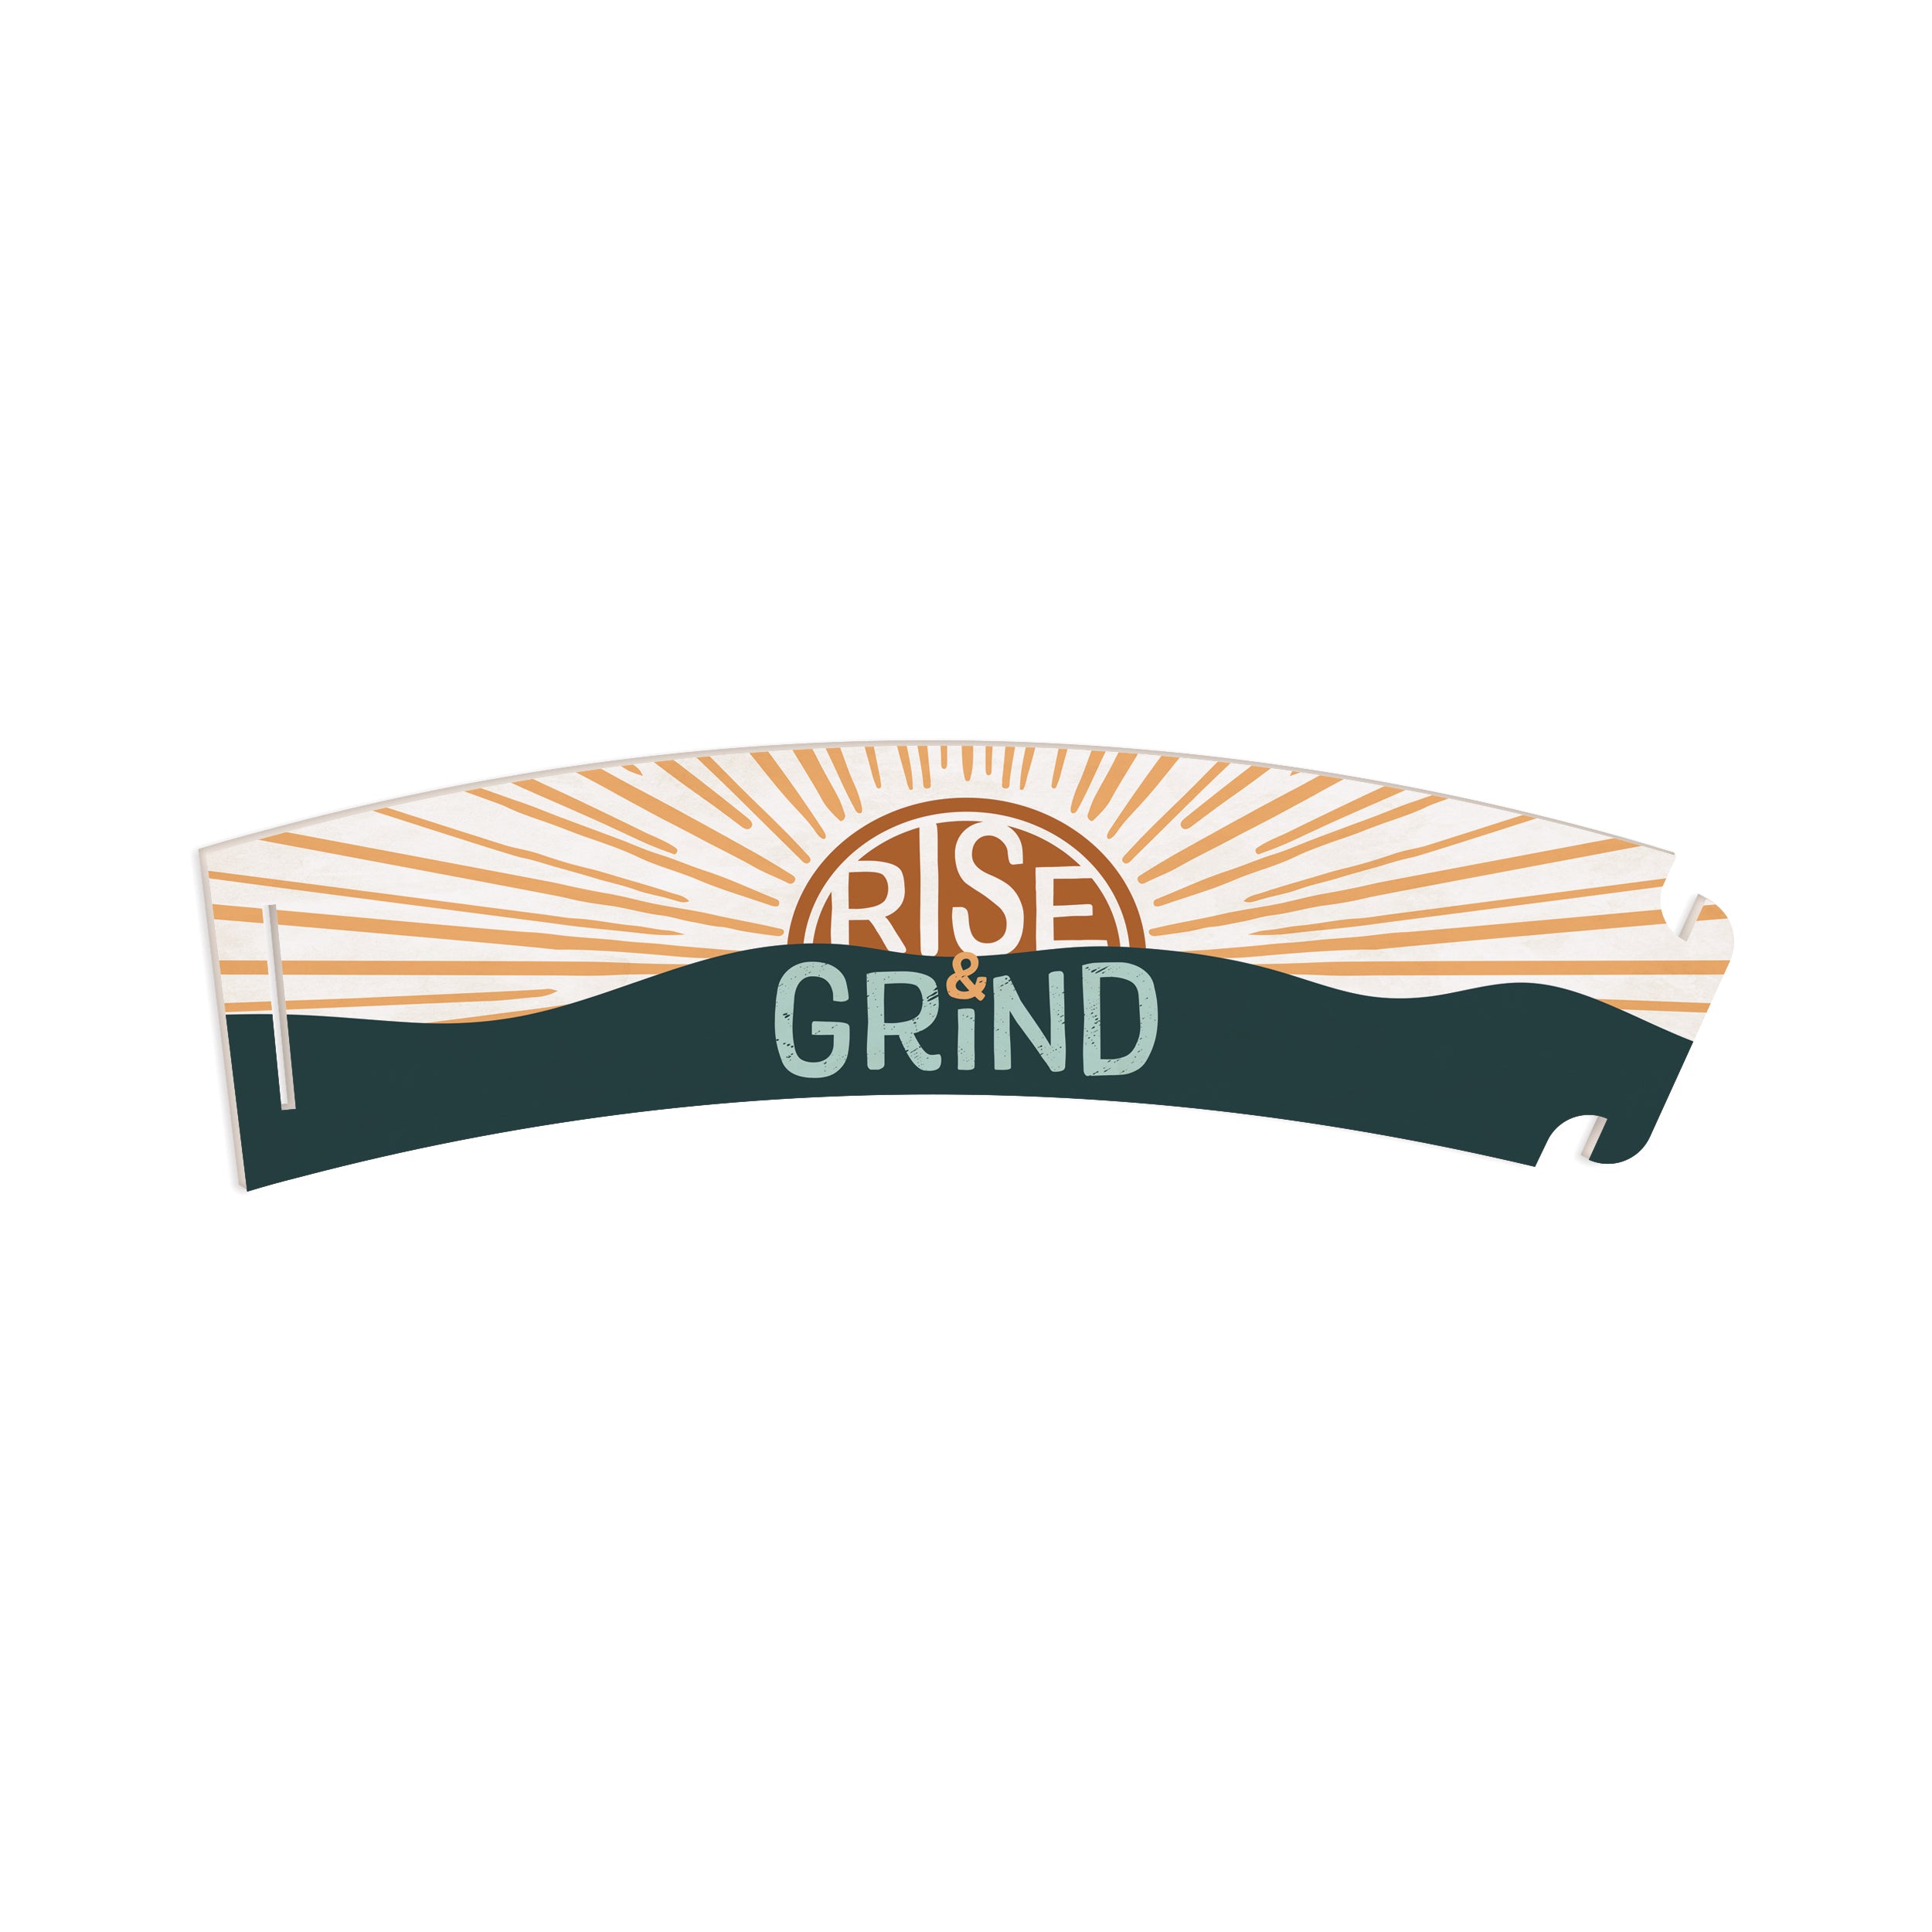 Rise And Grind Mug Hug